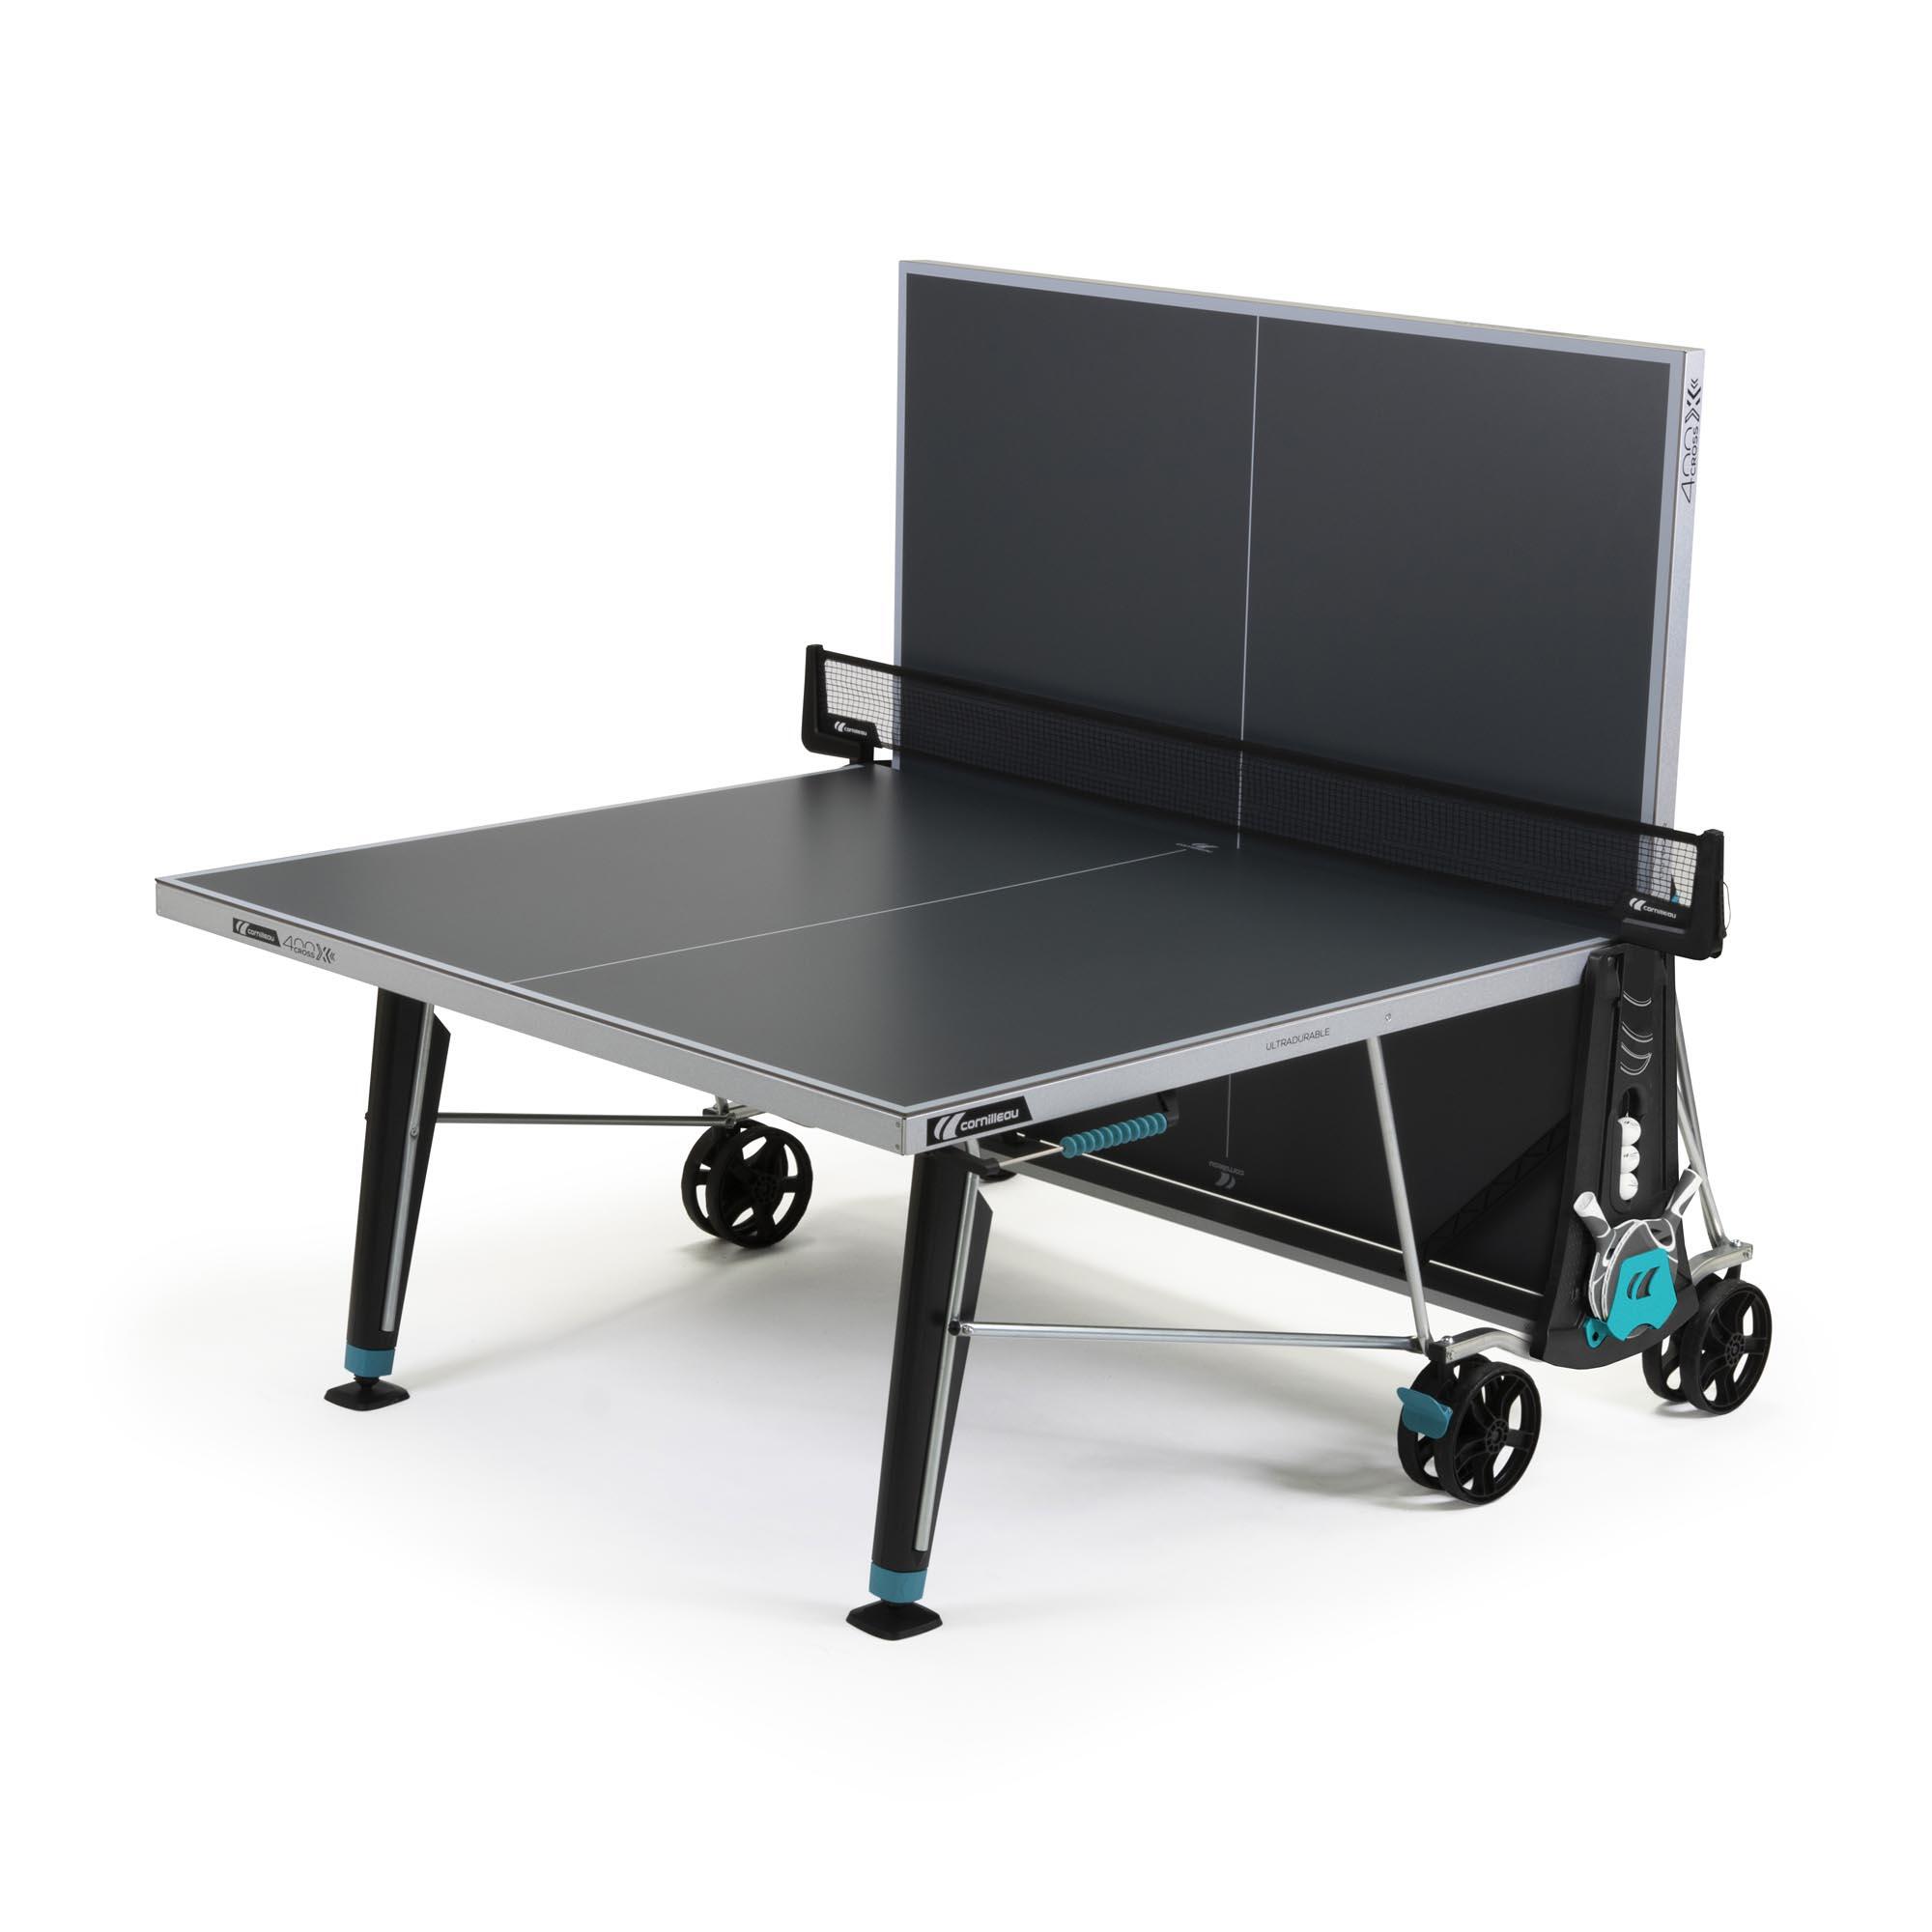 Outdoor Table Tennis Table 400X - Grey 3/22